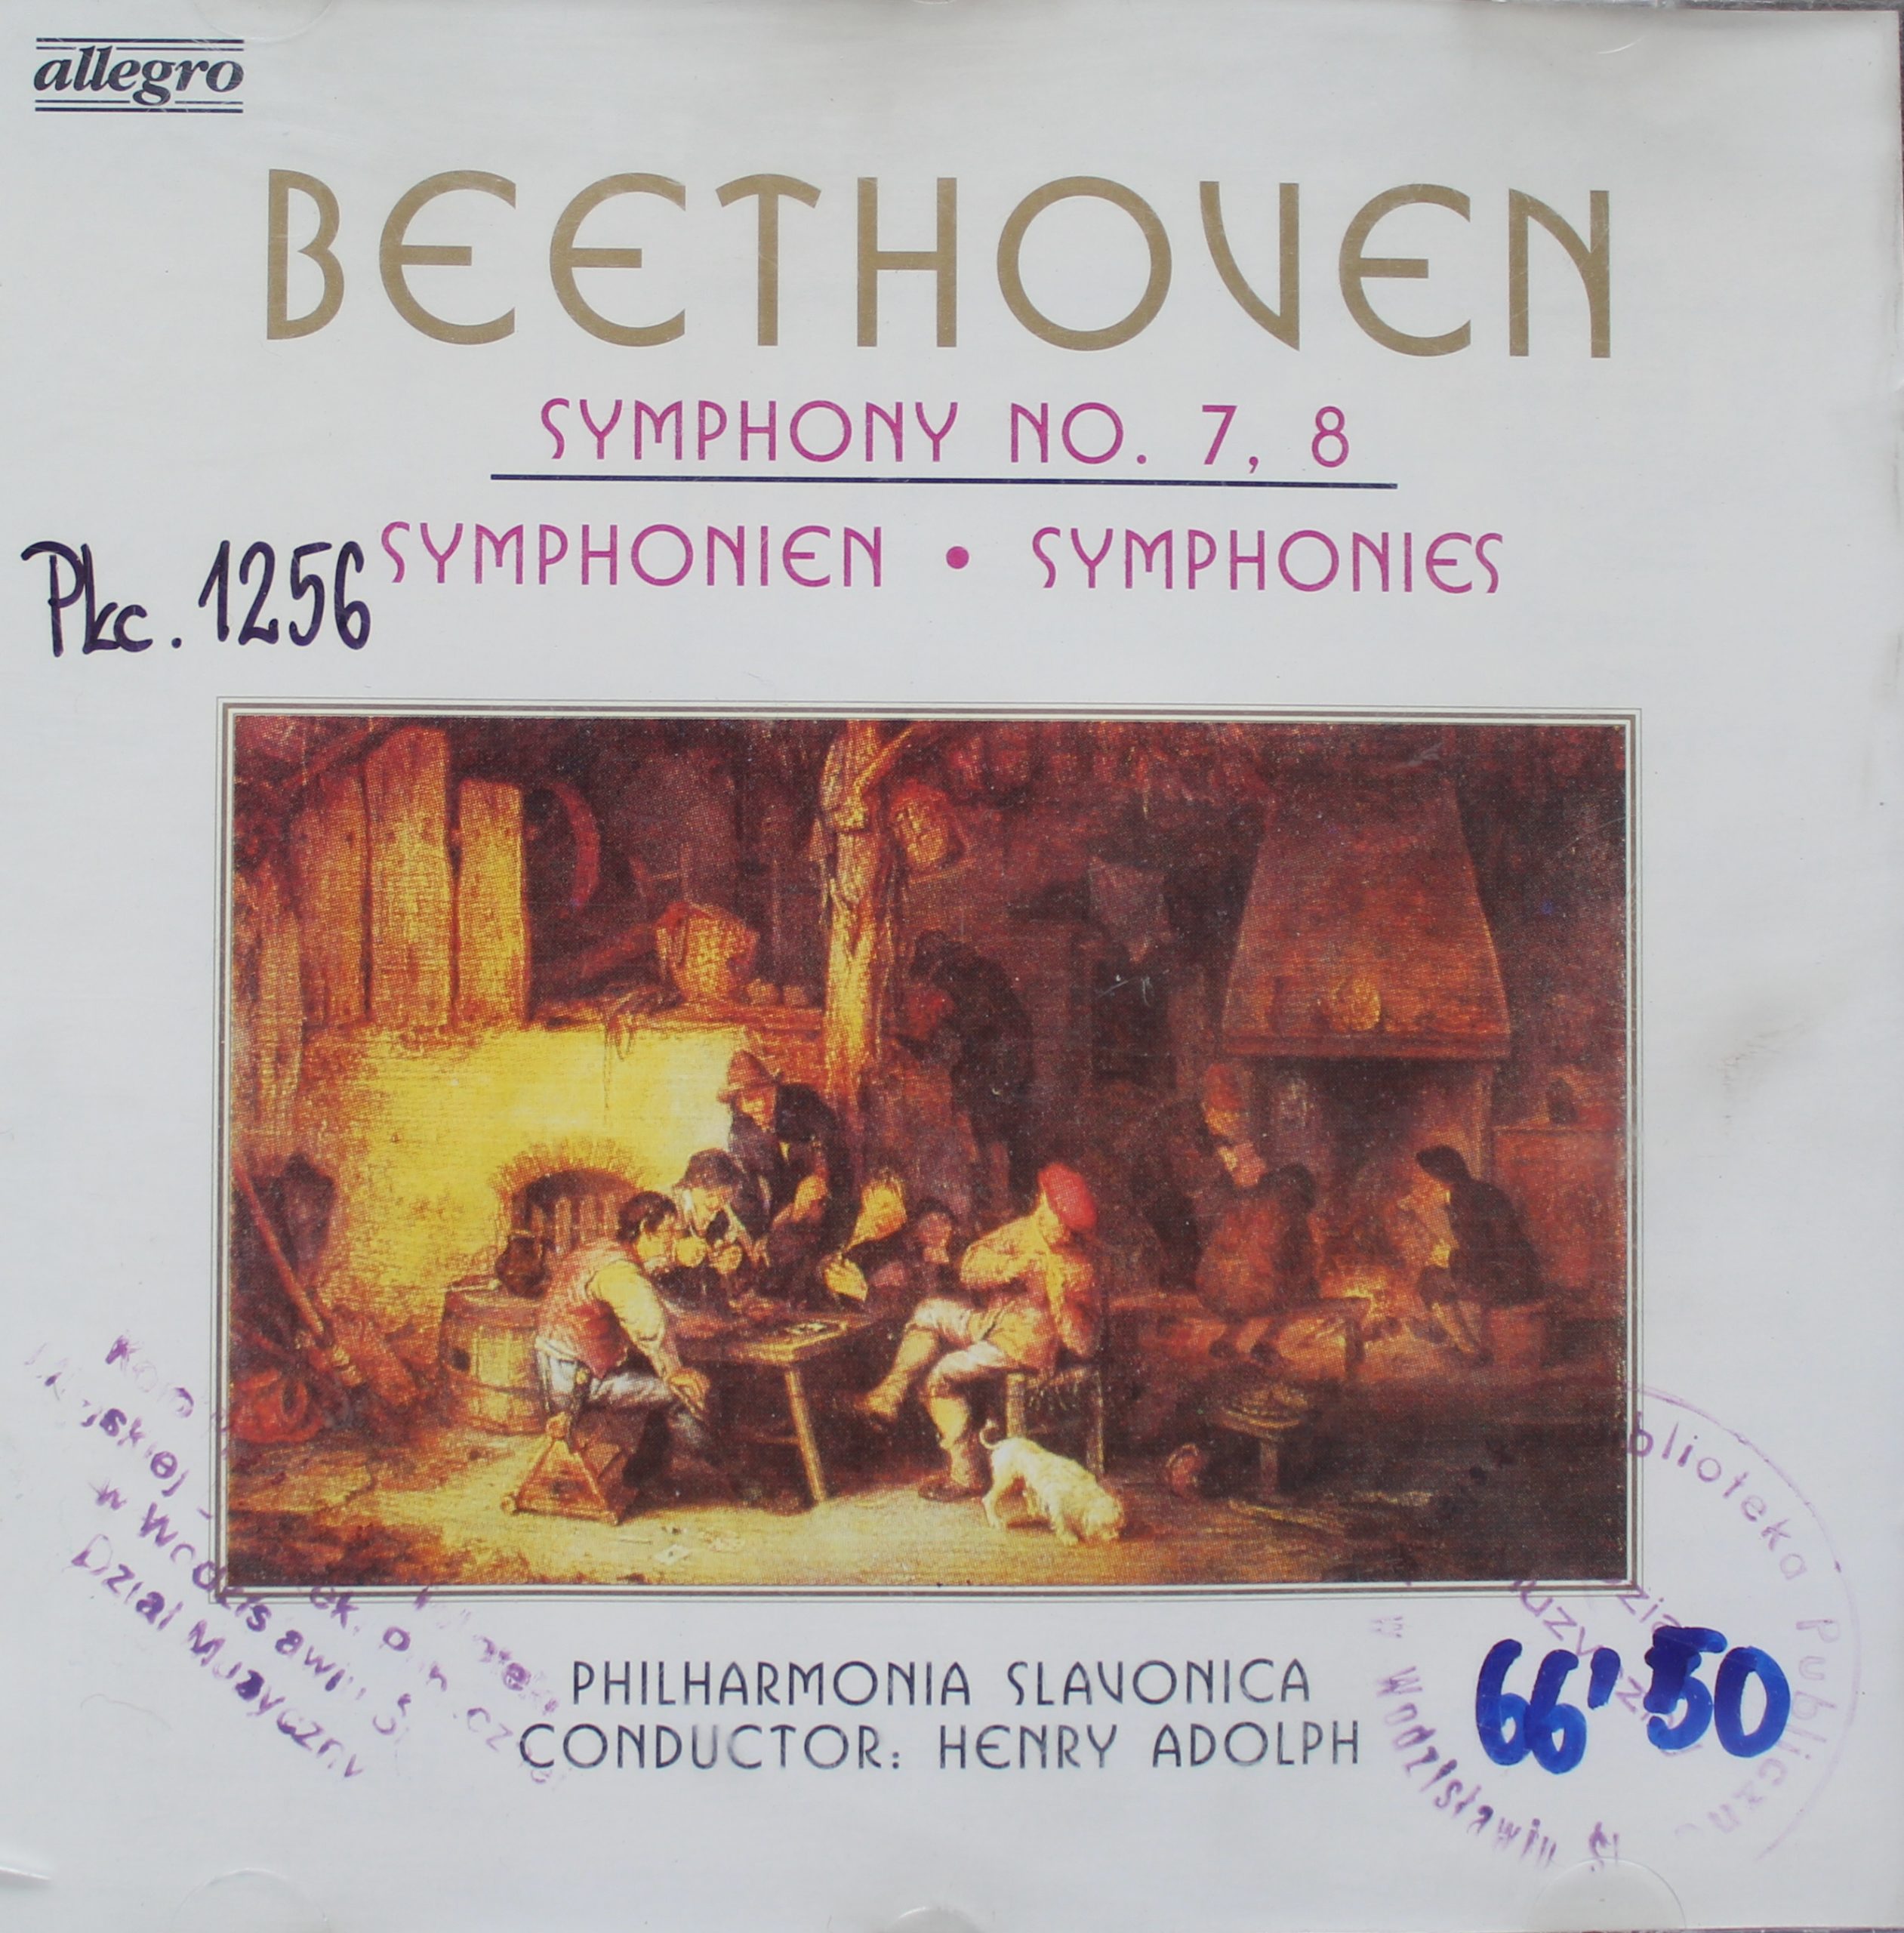 Beethoven – Symphony No. 7, 8